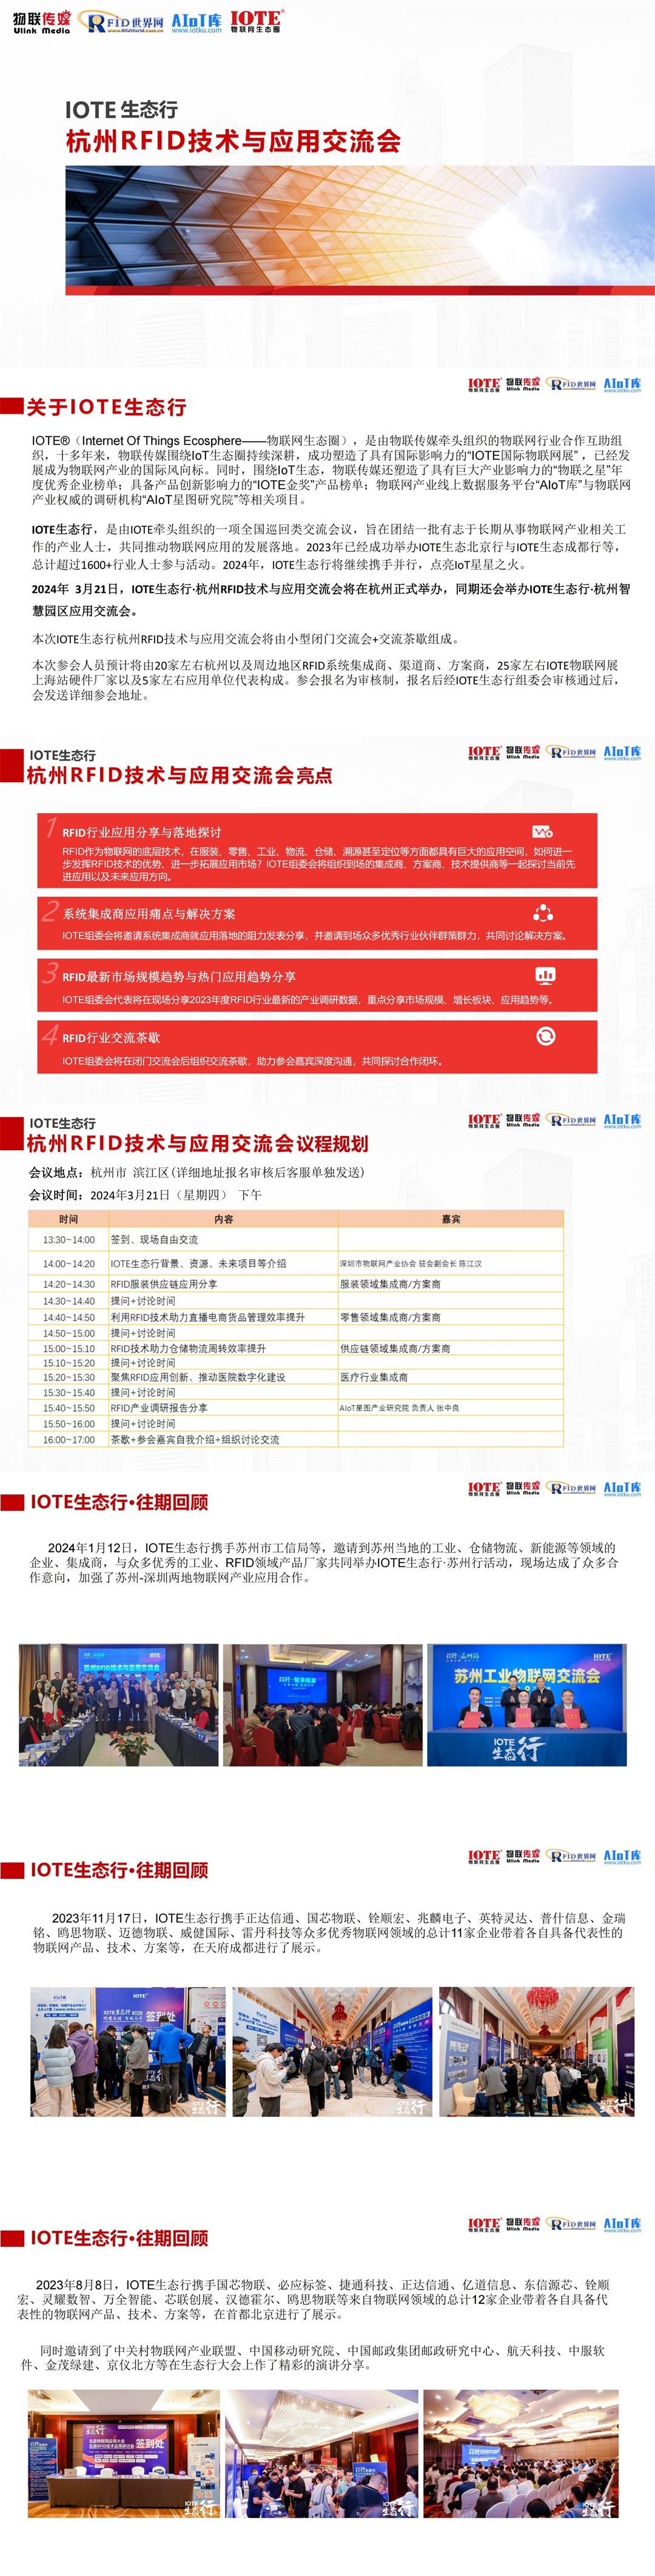 IOTE生态行·杭州RFID技术与应用交流会(2)_00.jpg